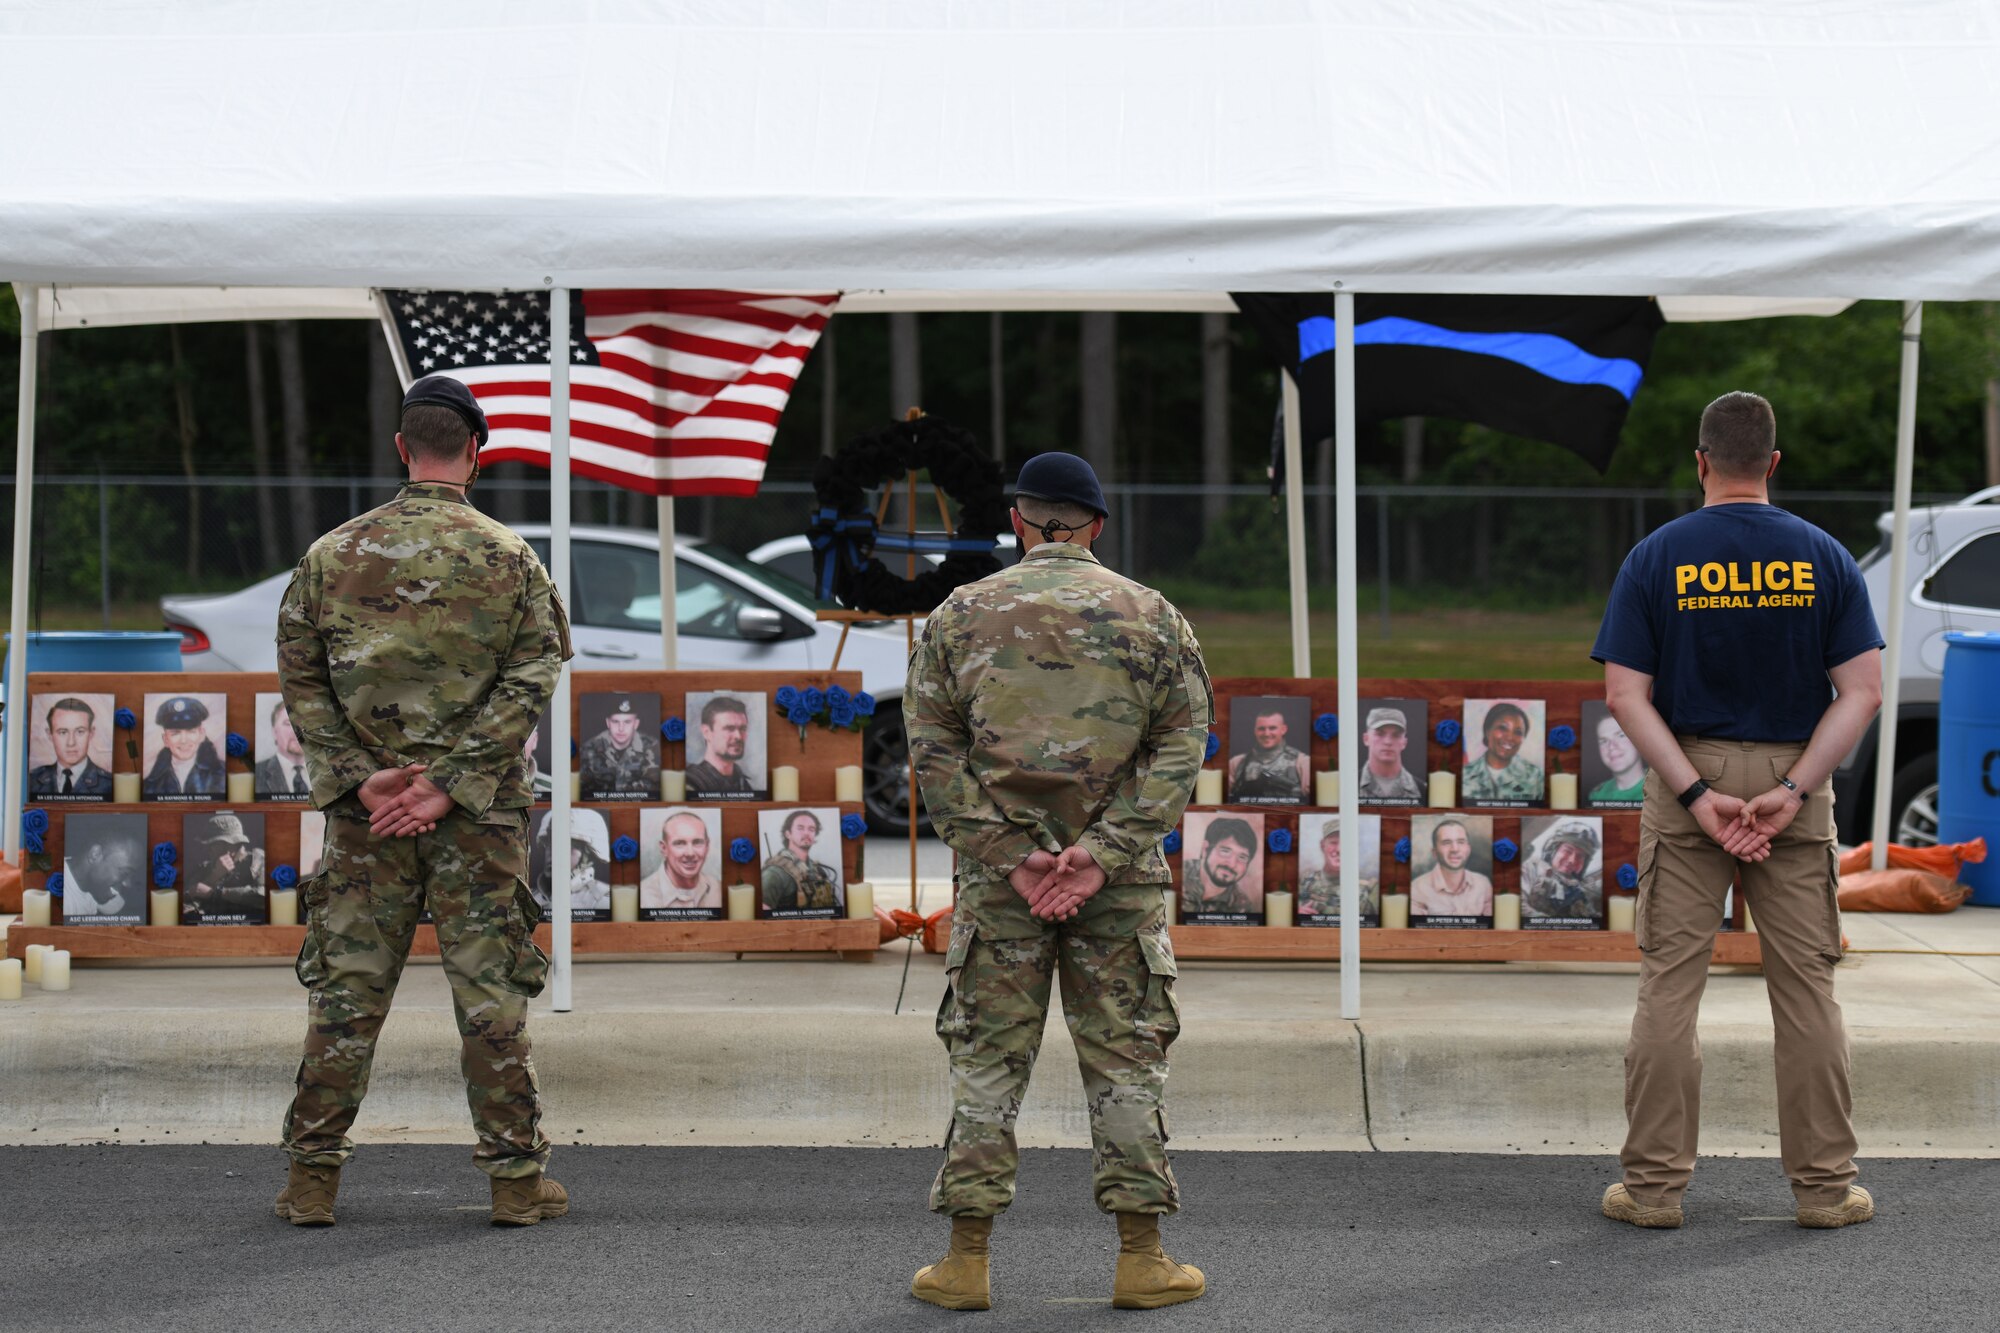 Airmen sanding at parade rest at a memorial